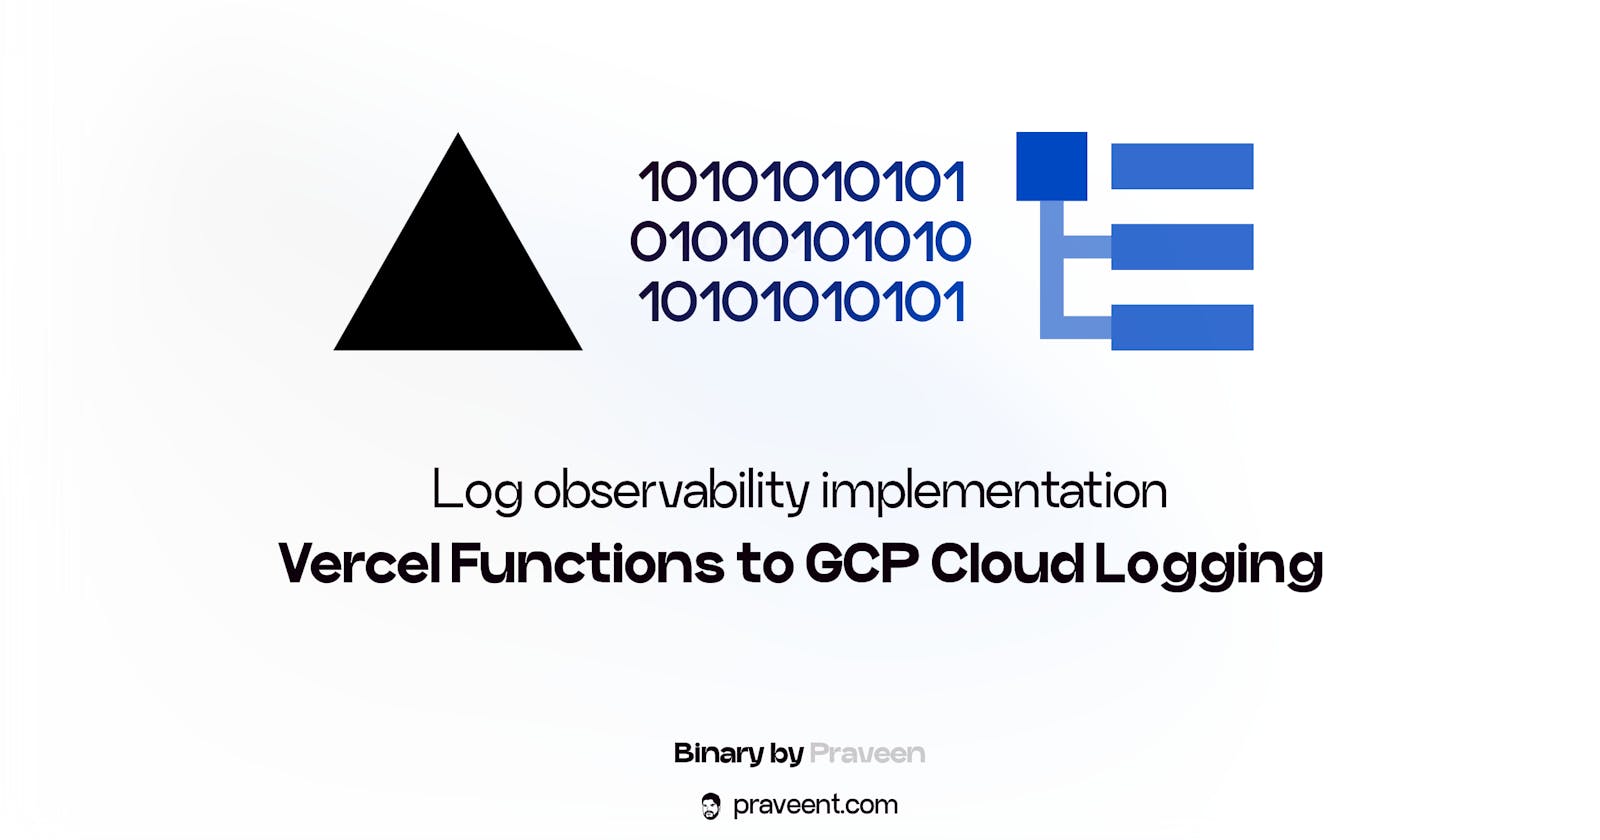 Vercel Functions to GCP Cloud Logging